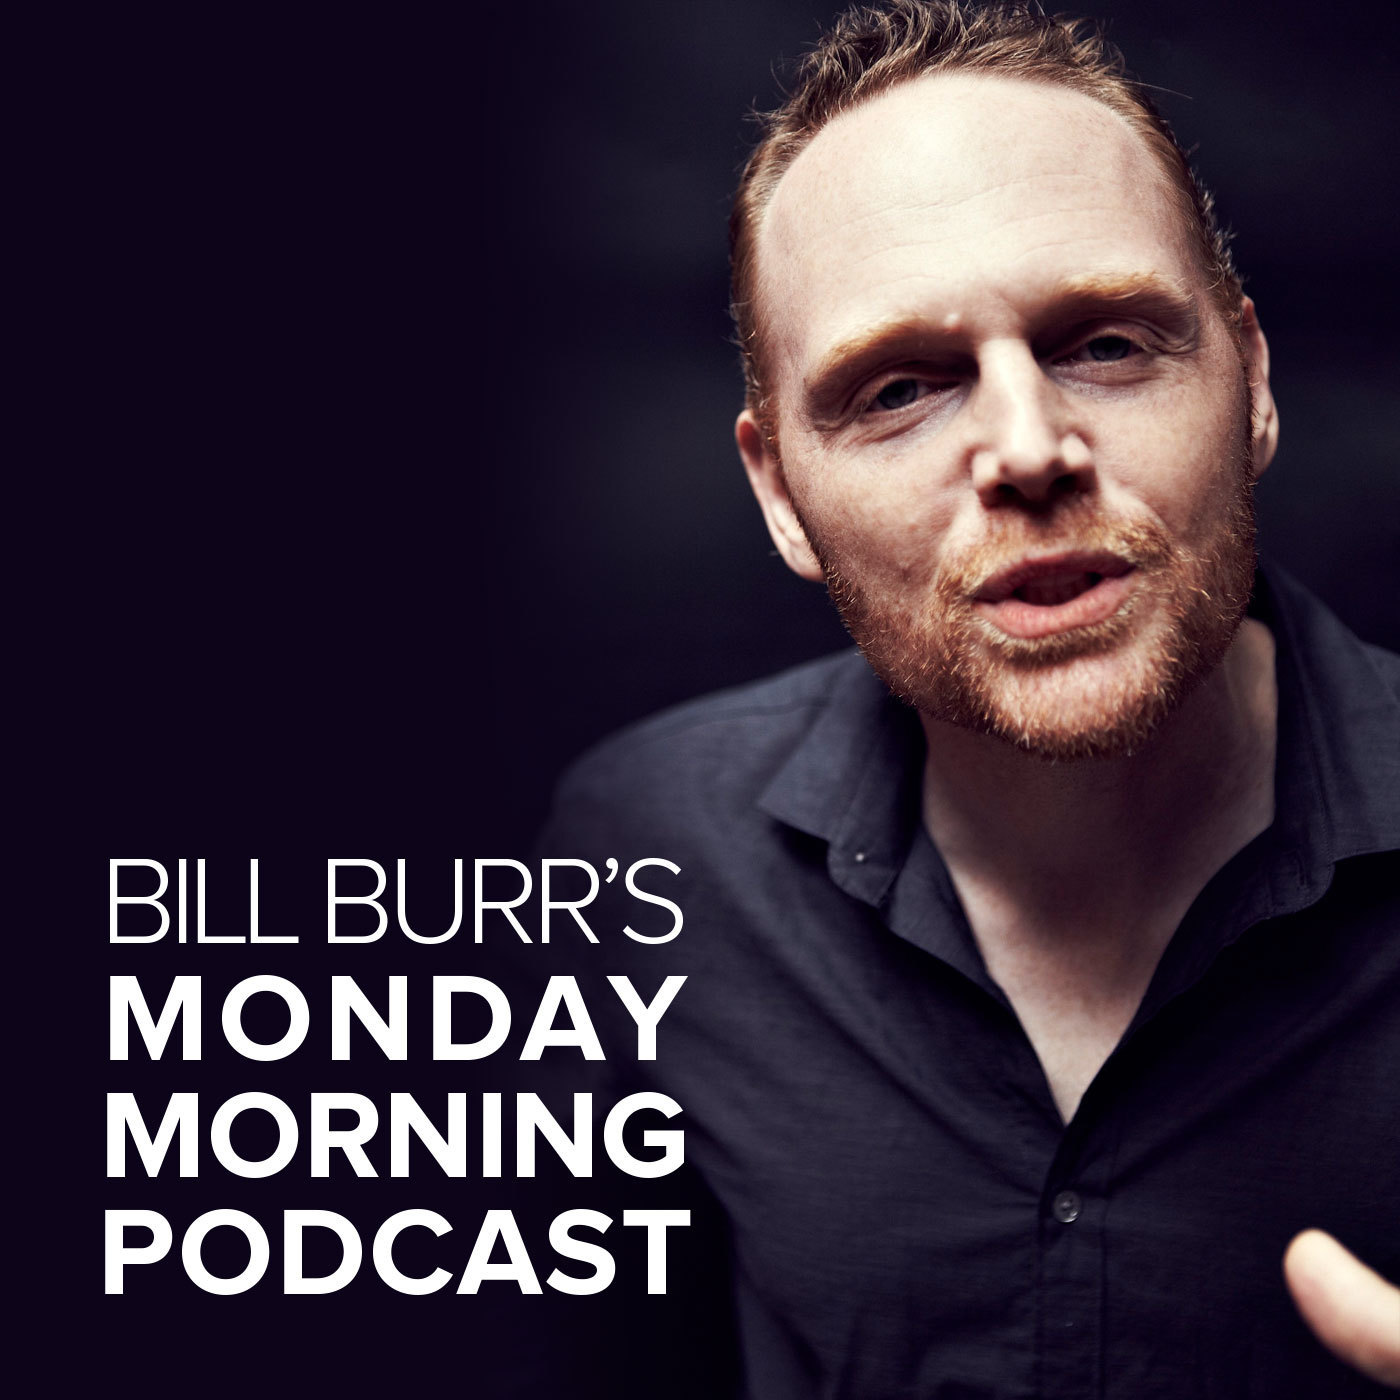 Monday Morning Podcast 2-25-13